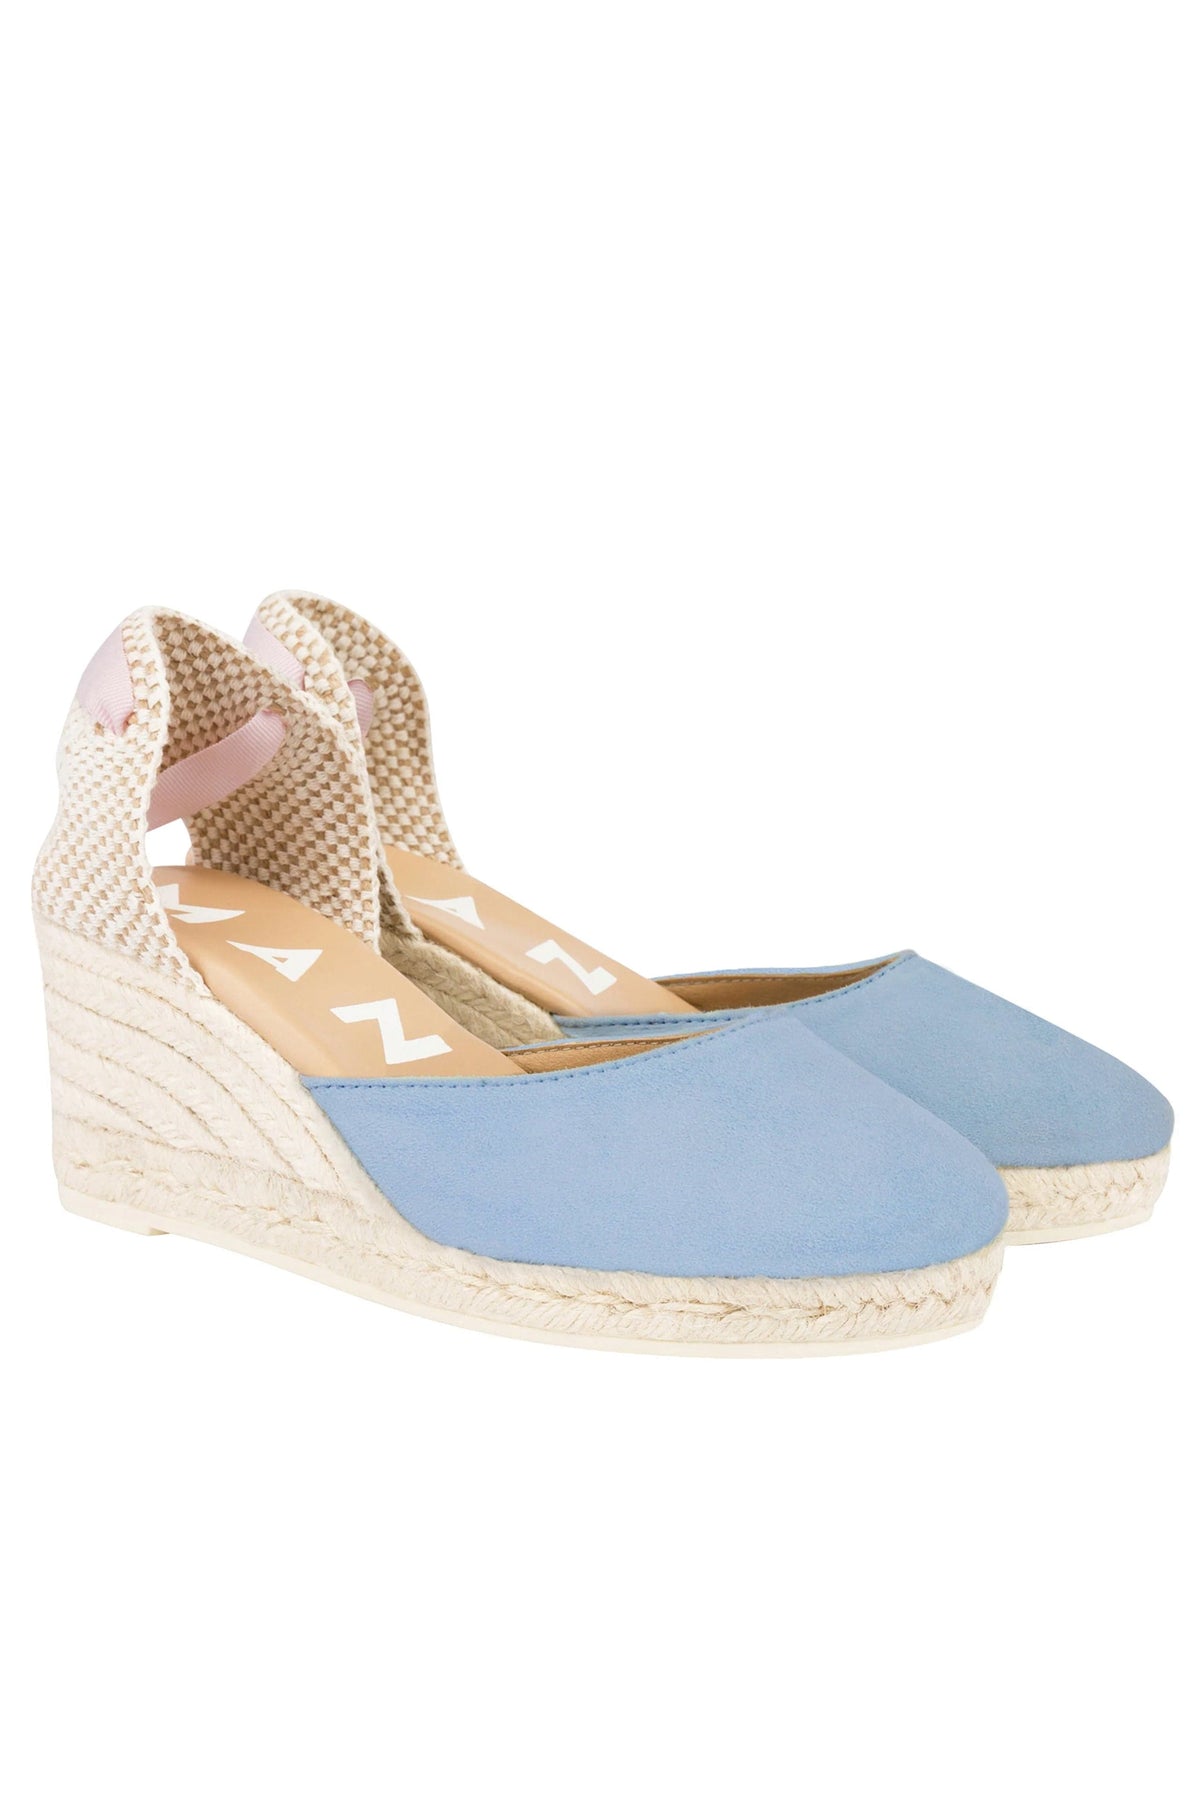 MANEBI CALZATURE  PLACID BLUE / 35 Sandalo Donna Soft Suede Hamptons Manebi